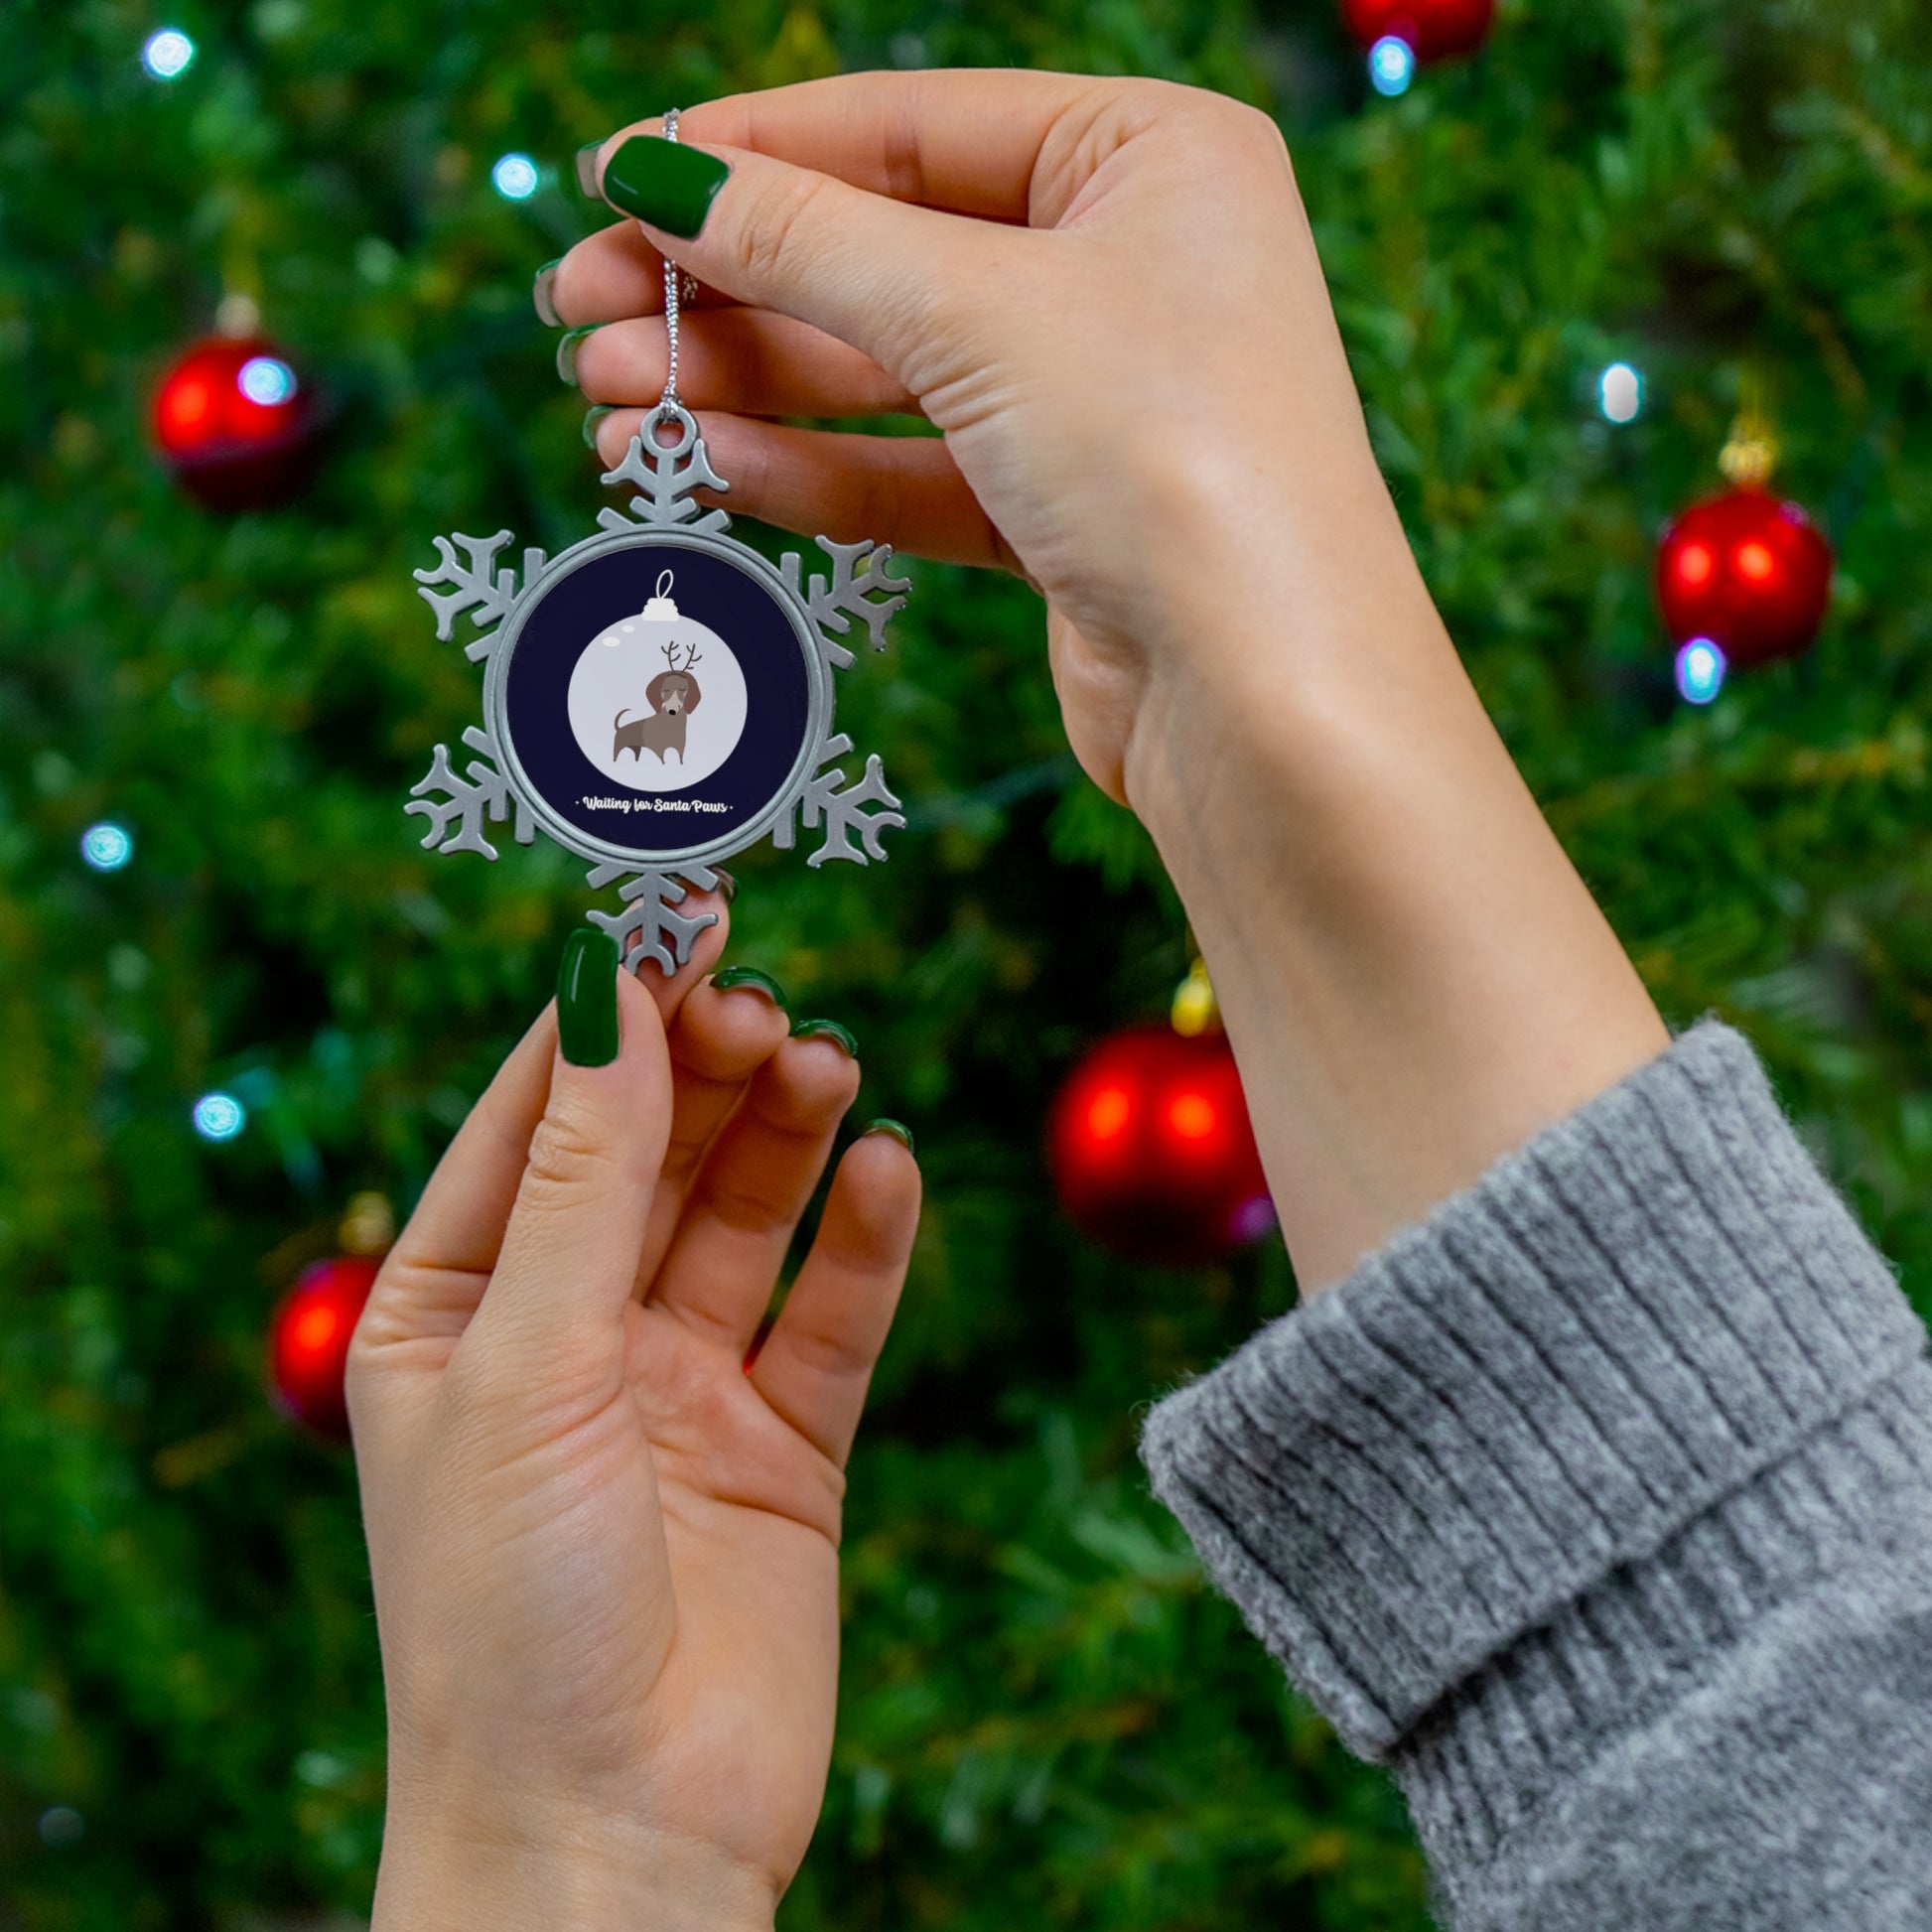 Waiting For Santa Paws - Pewter Snowflake Ornament Christmas Ornament